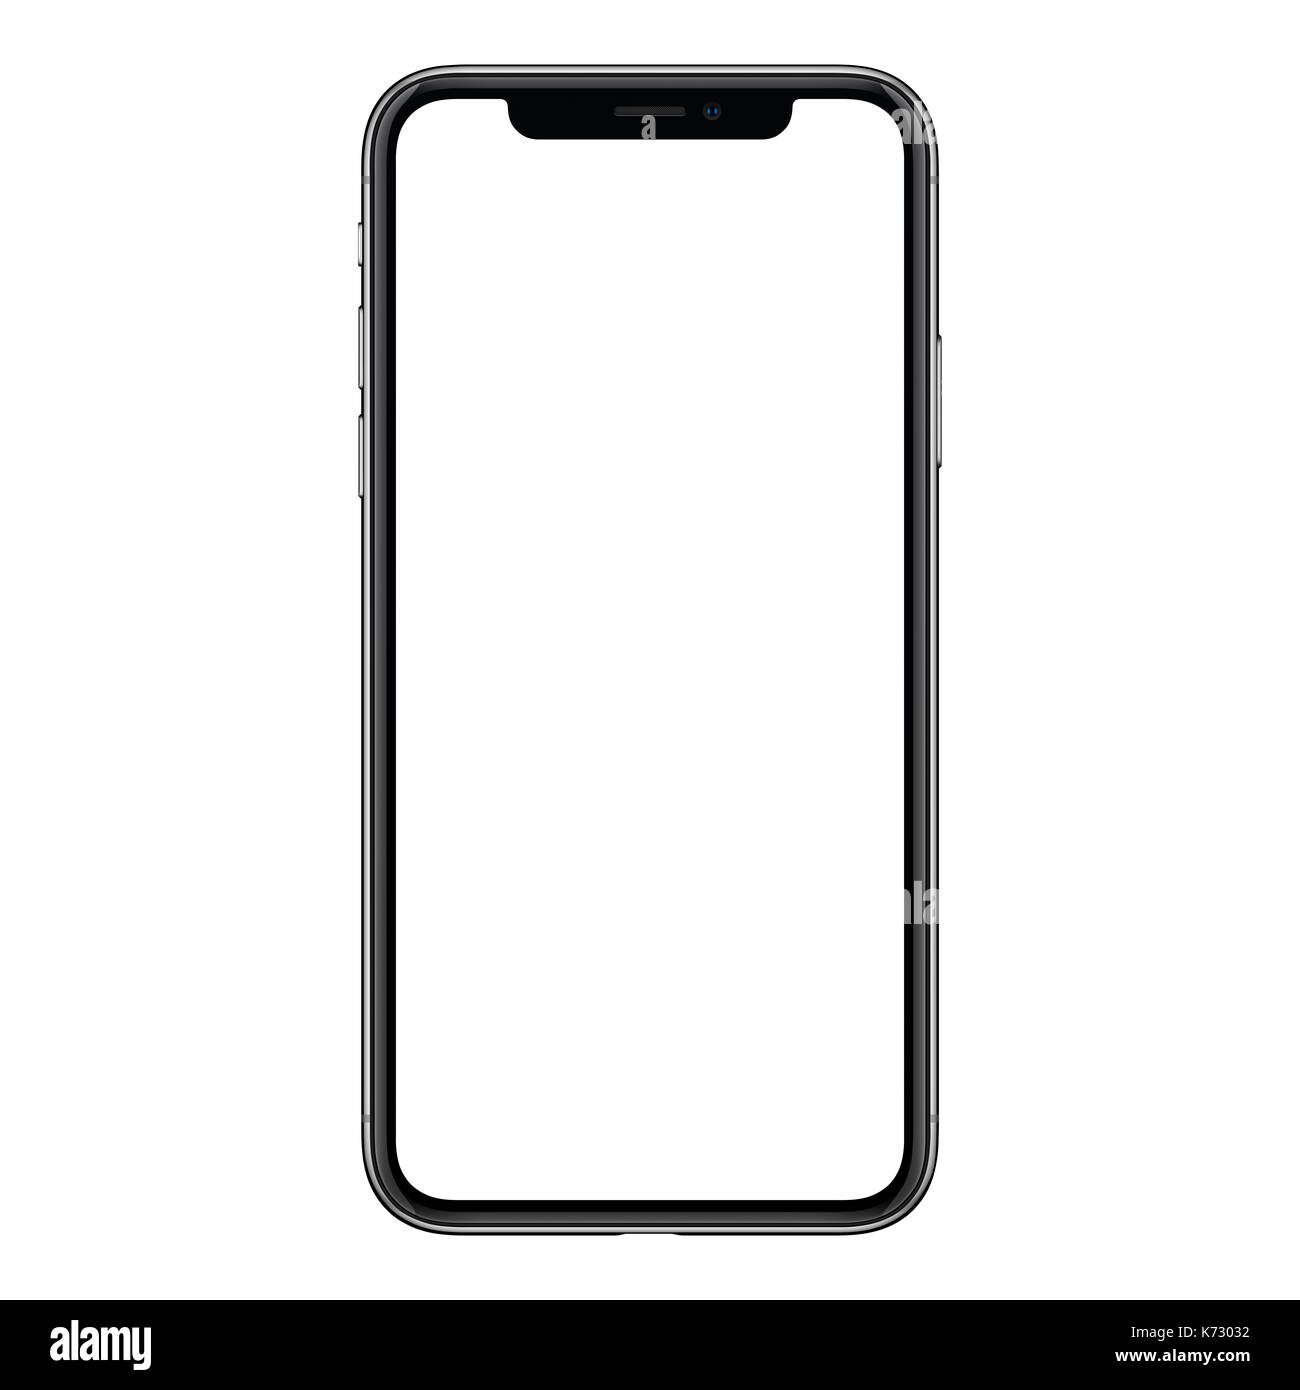 Smartphone mockup similar to iphone X. New black frameless smartphone mockup with white screen. Isolated on white background. Stock Photo